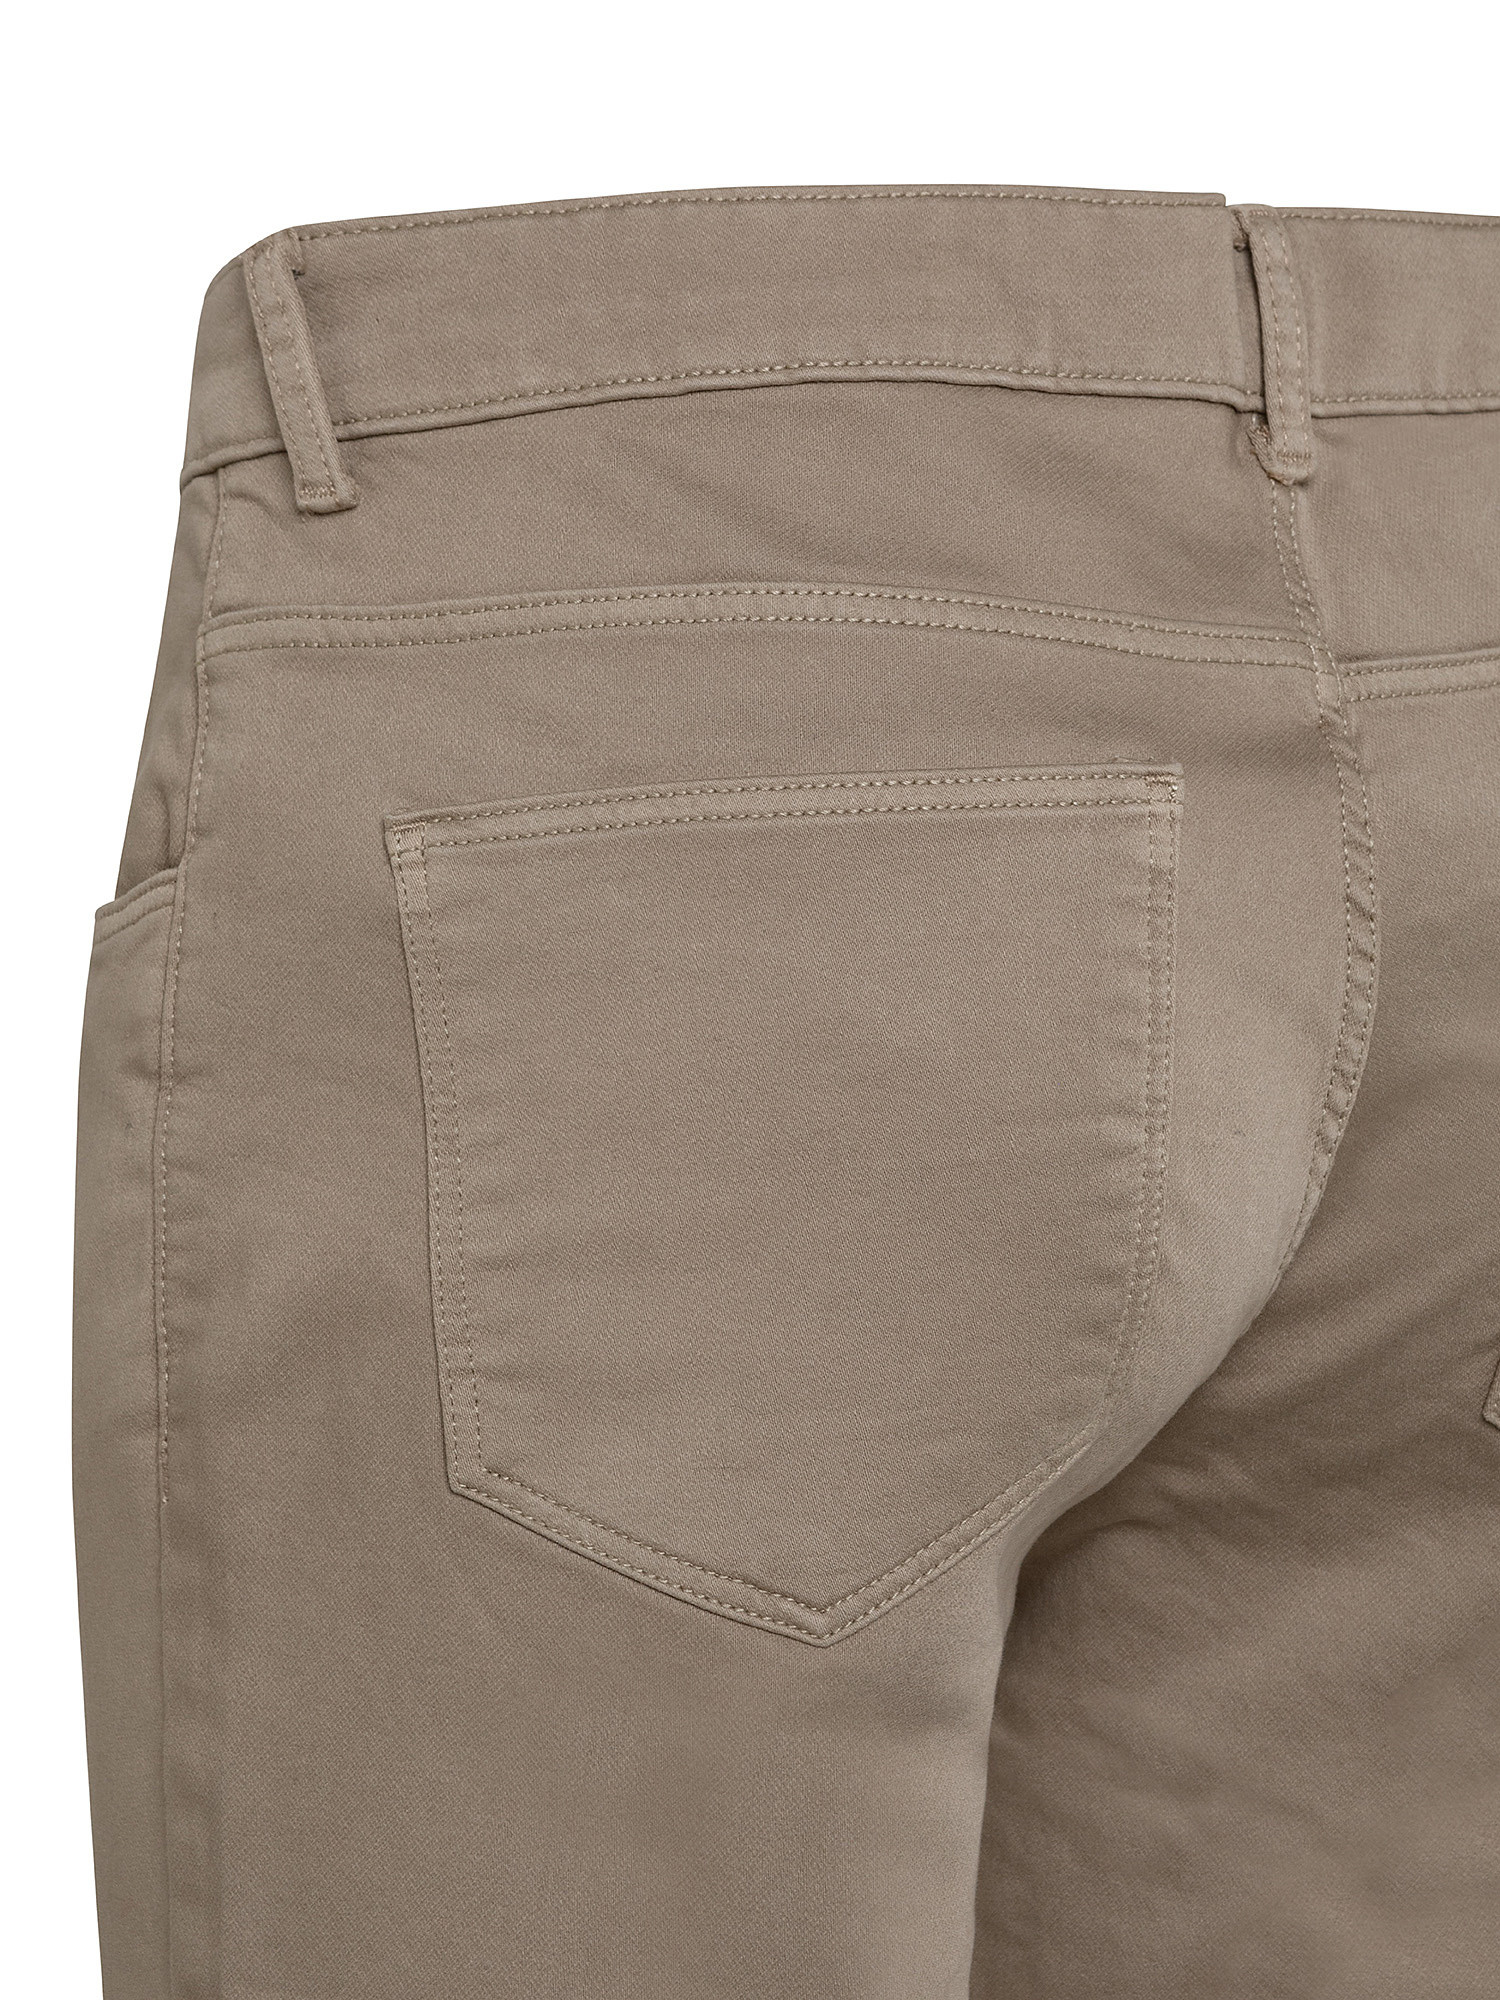 Pantalone 5 tasche slim in felpa, Beige, large